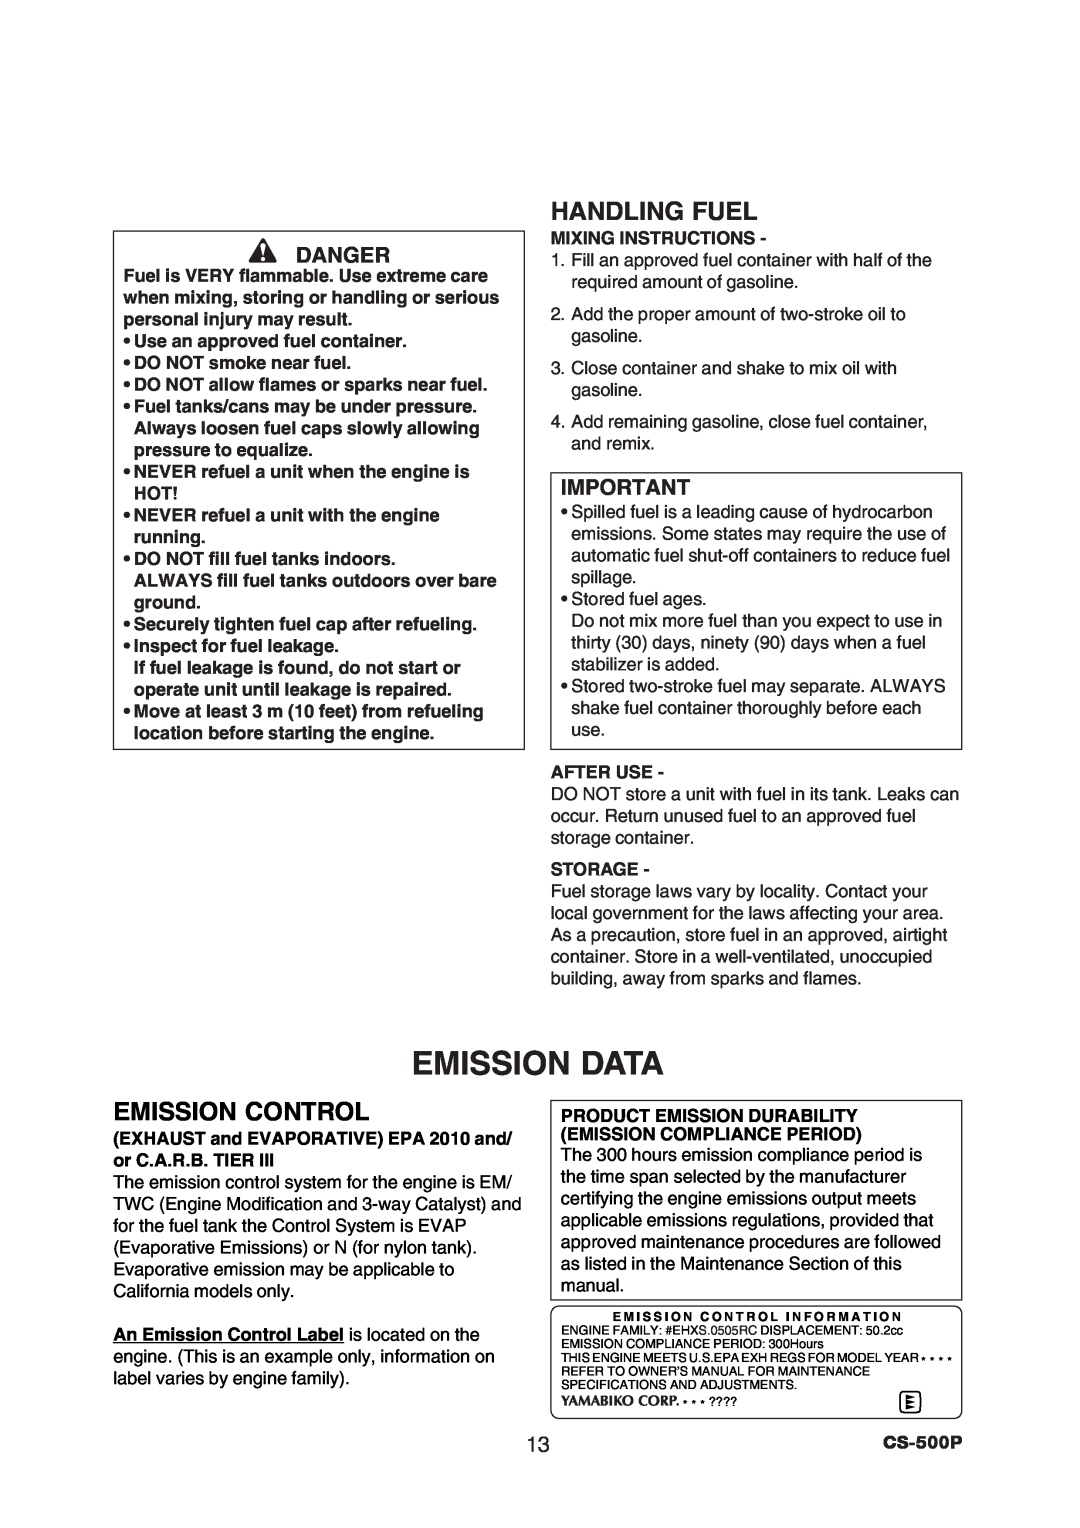 Echo CS-500P instruction manual Emission Data, Handling Fuel, Emission Control, Danger 